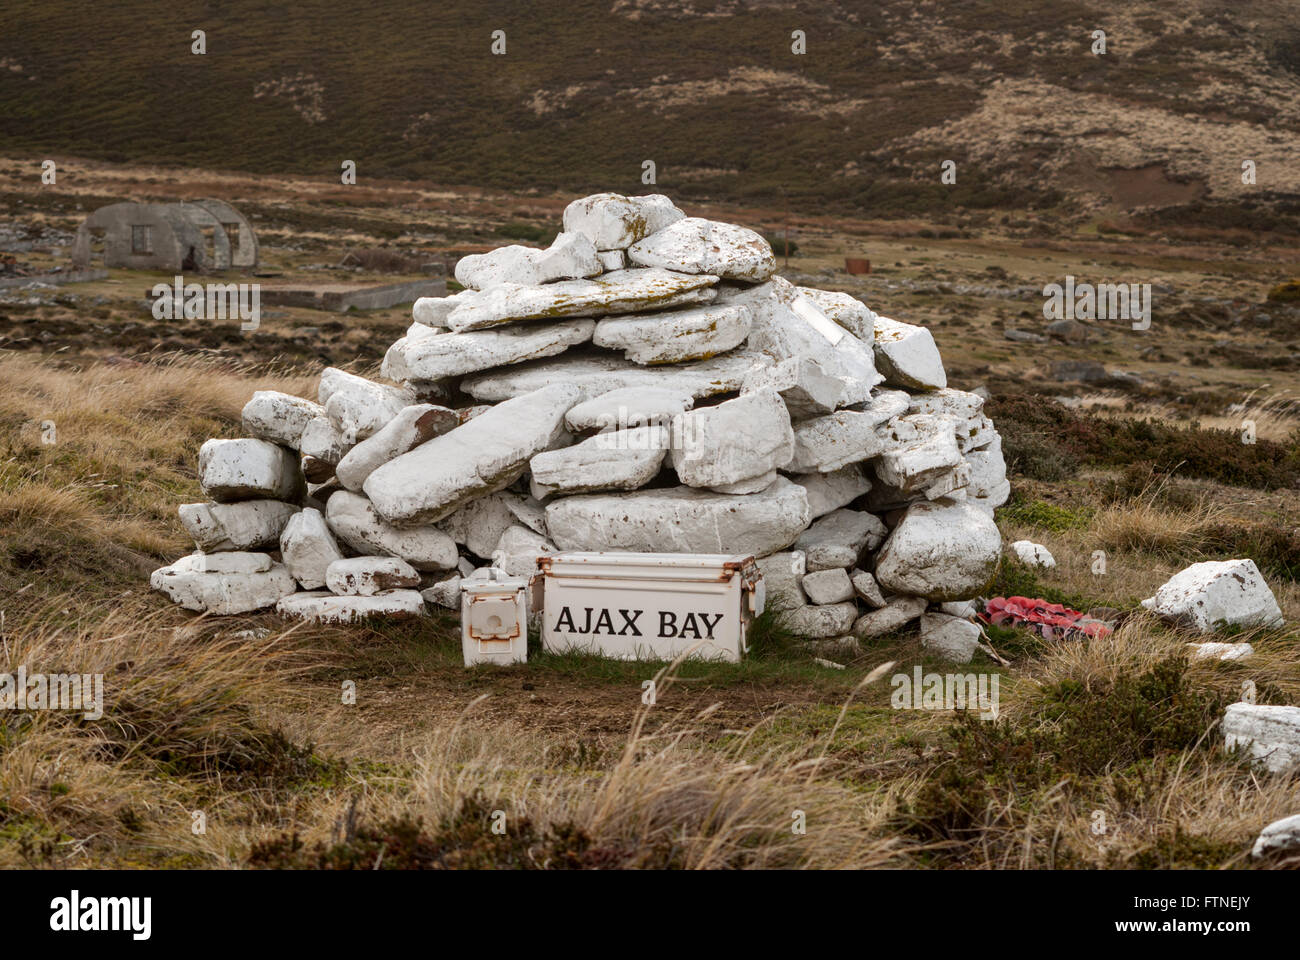 Ajax Bay memorial cairn at Ajax Bay, San Carlos Water, East Falkland, Falkland Islands, South America Stock Photo